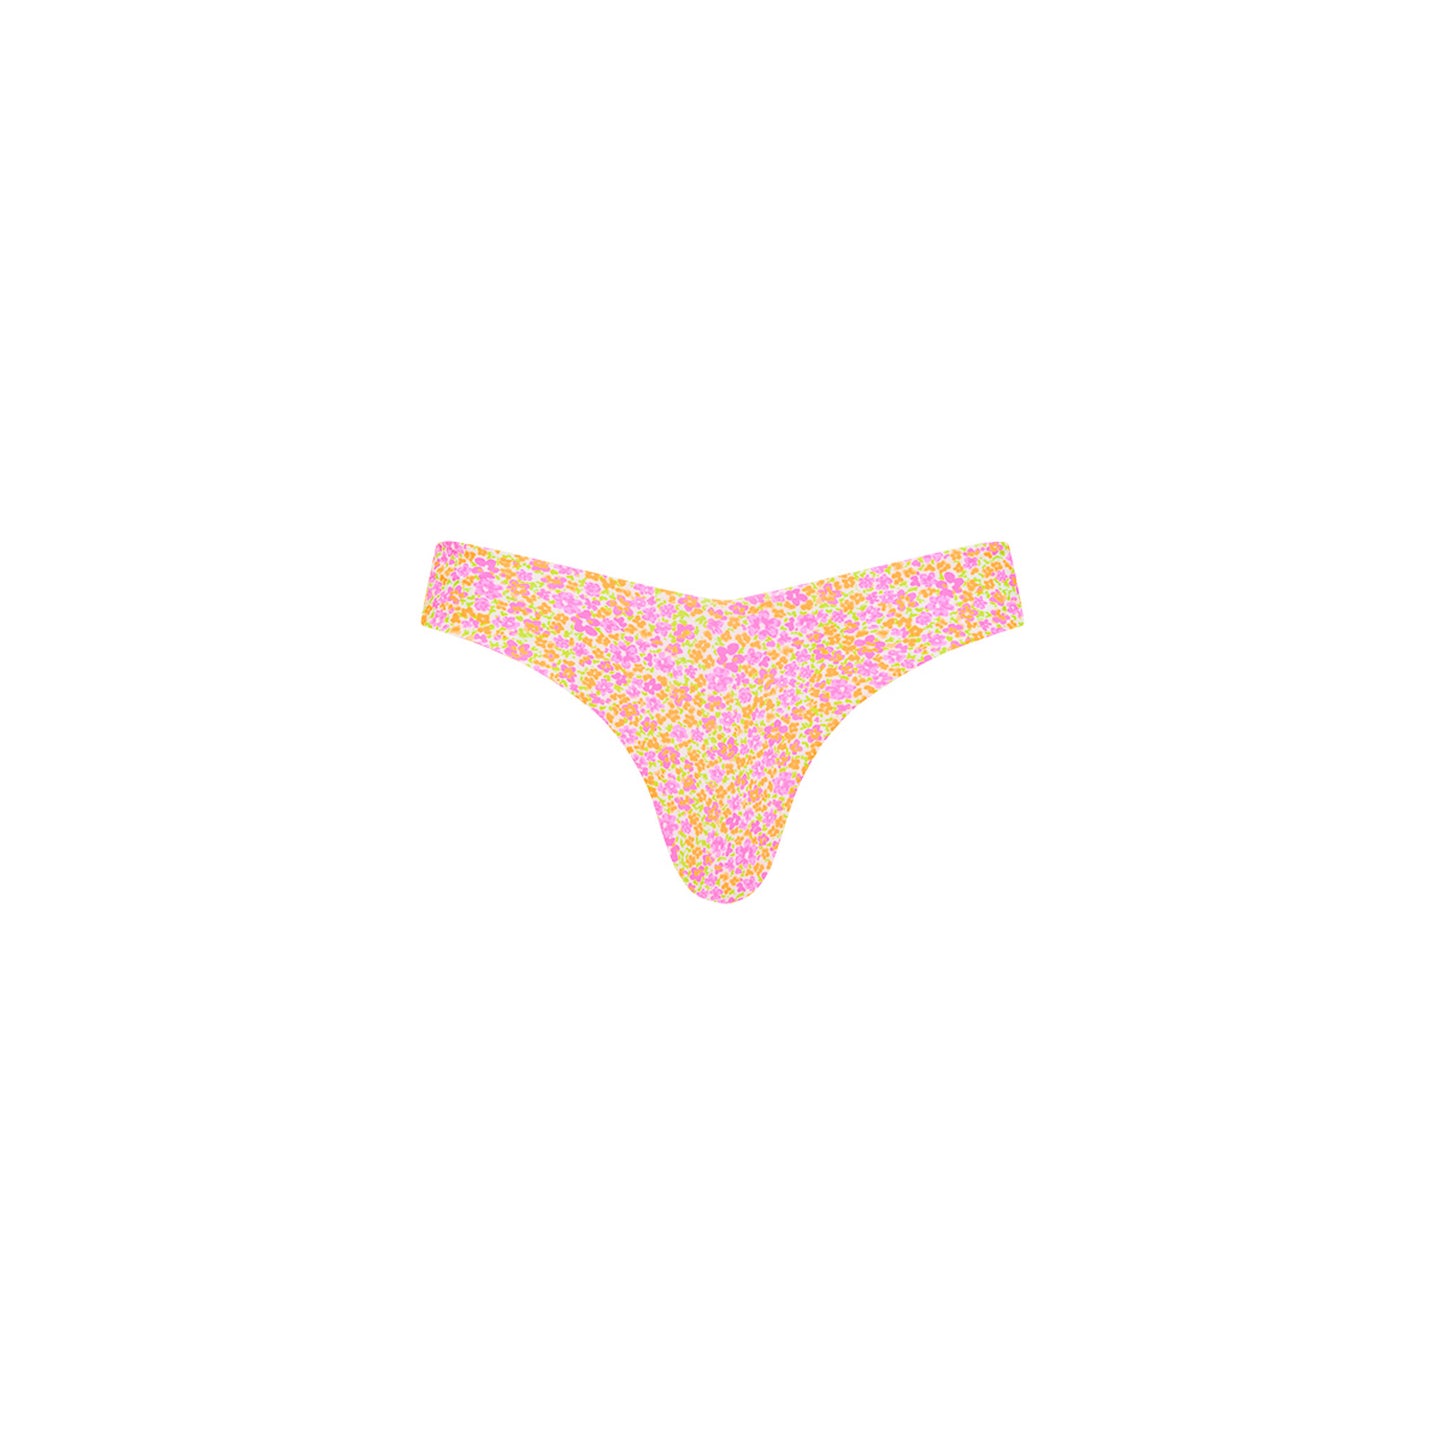 Kulani Kinis Cheeky V Bikini Bottom - Champagne Blossom (Coconut Cove Collection)